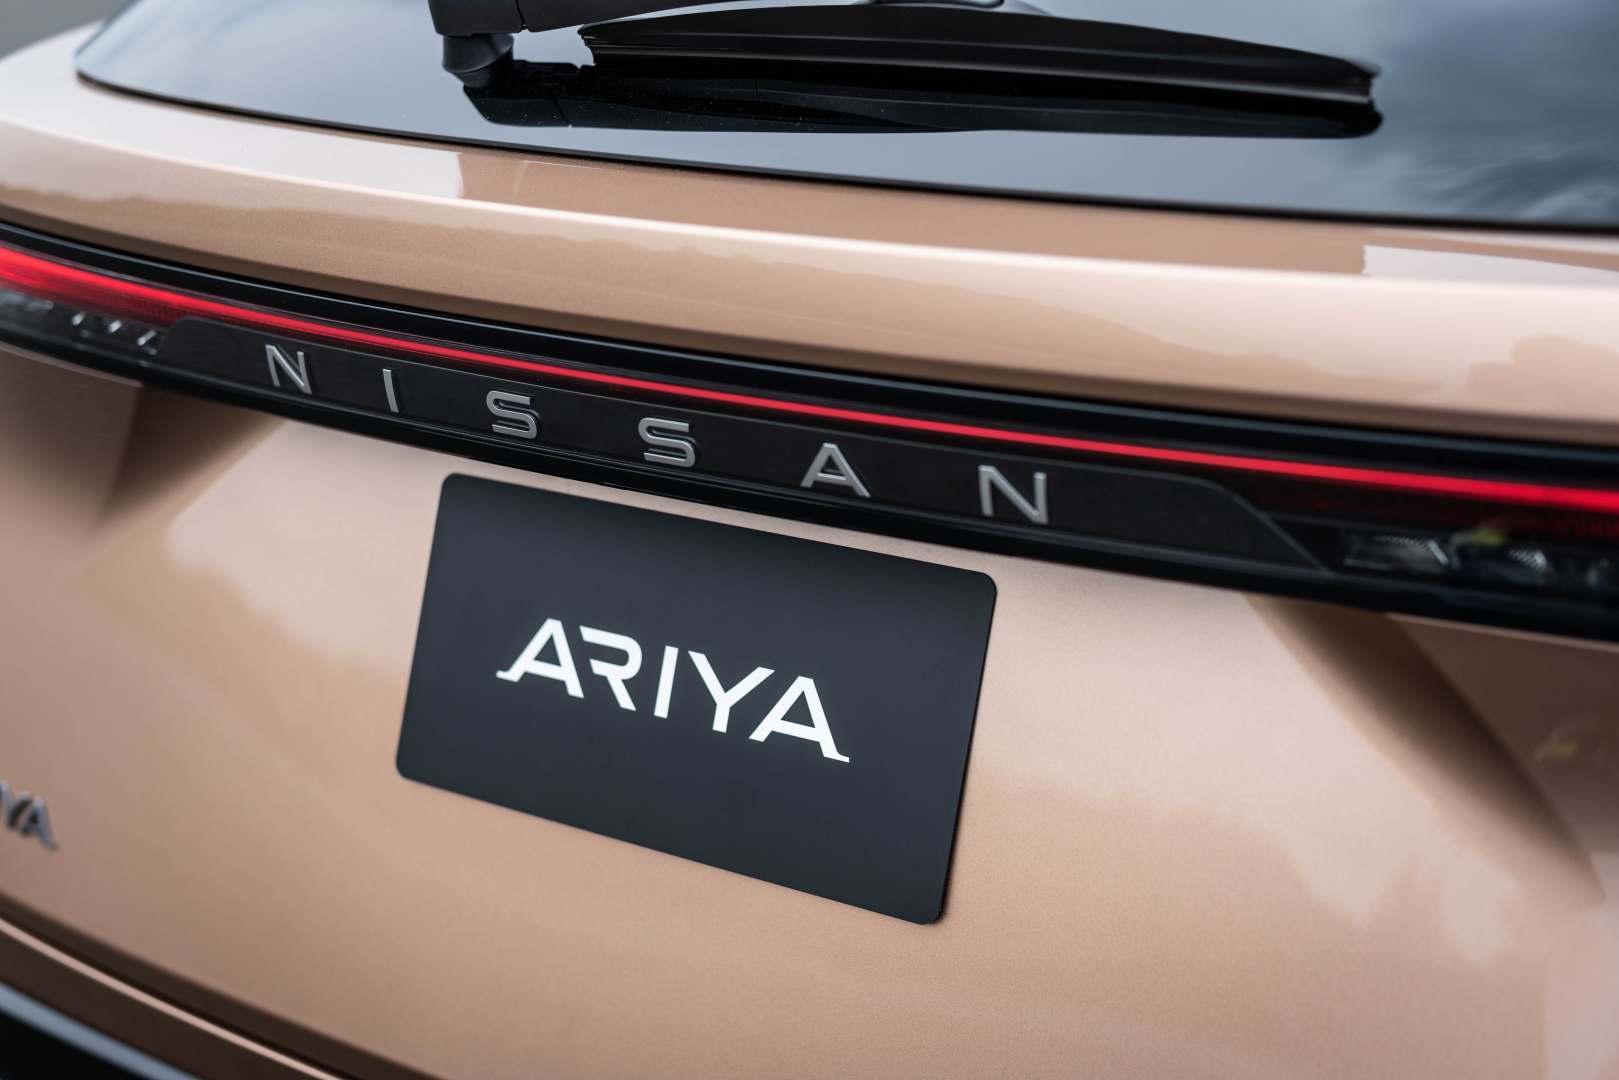 SMALL_Nissan Ariya badge_Rear